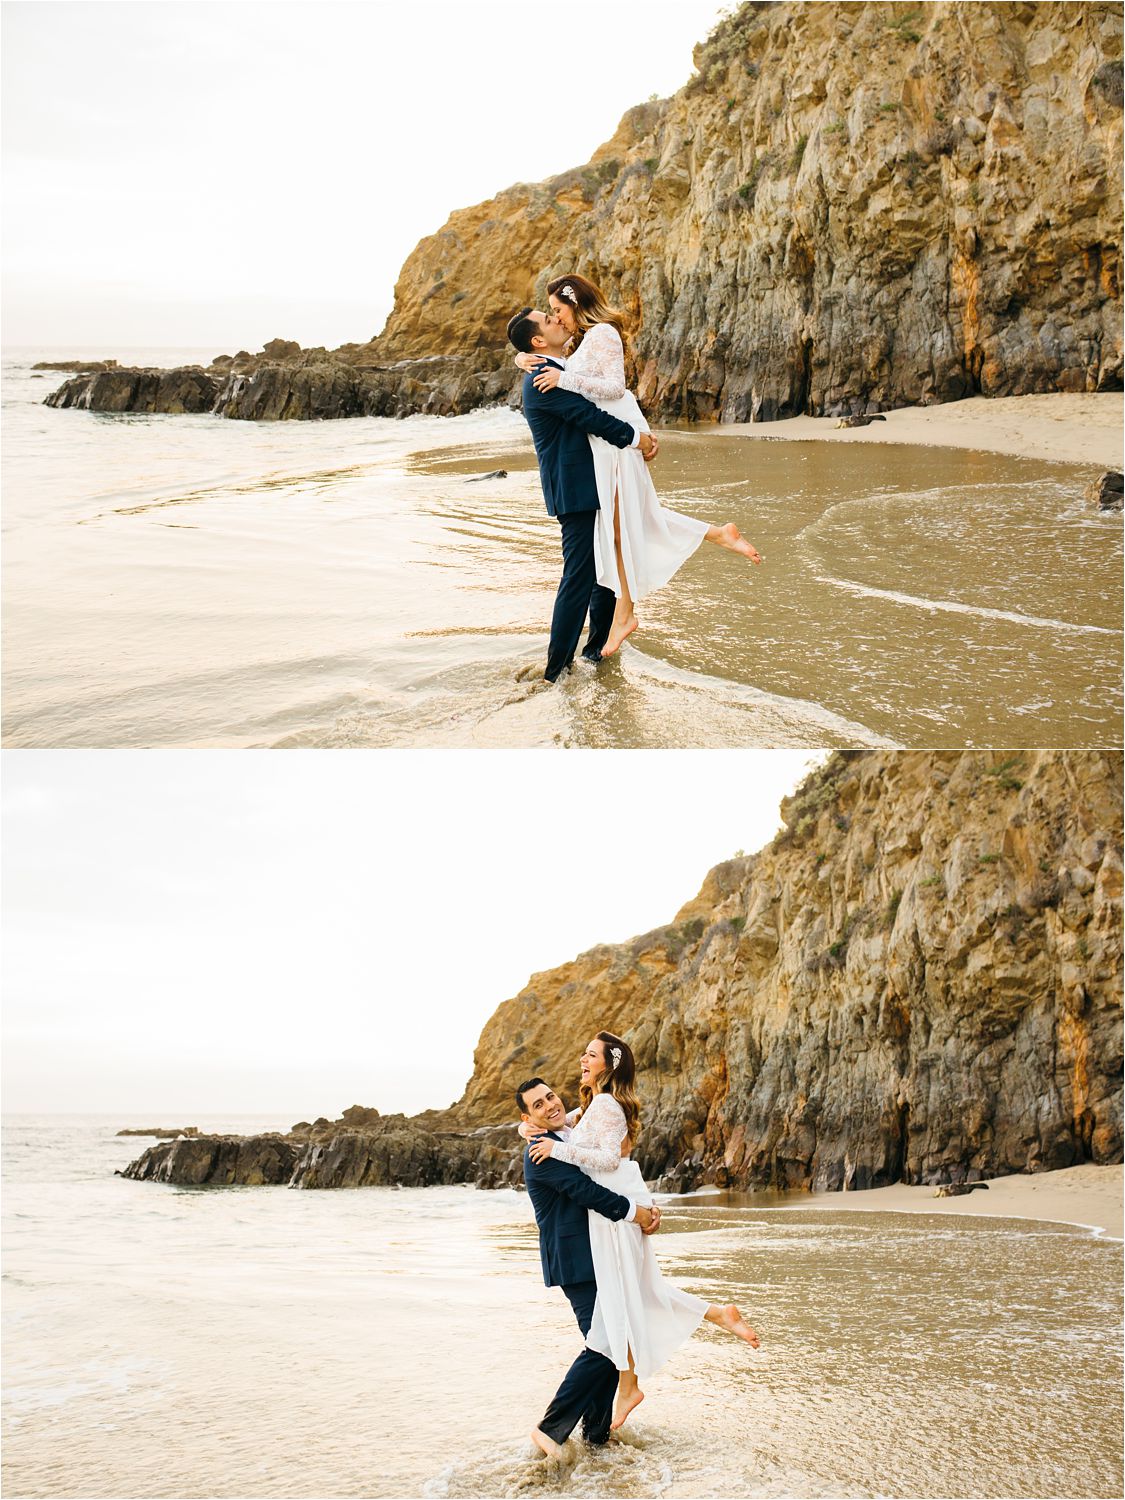 Engagement Photos on the beach